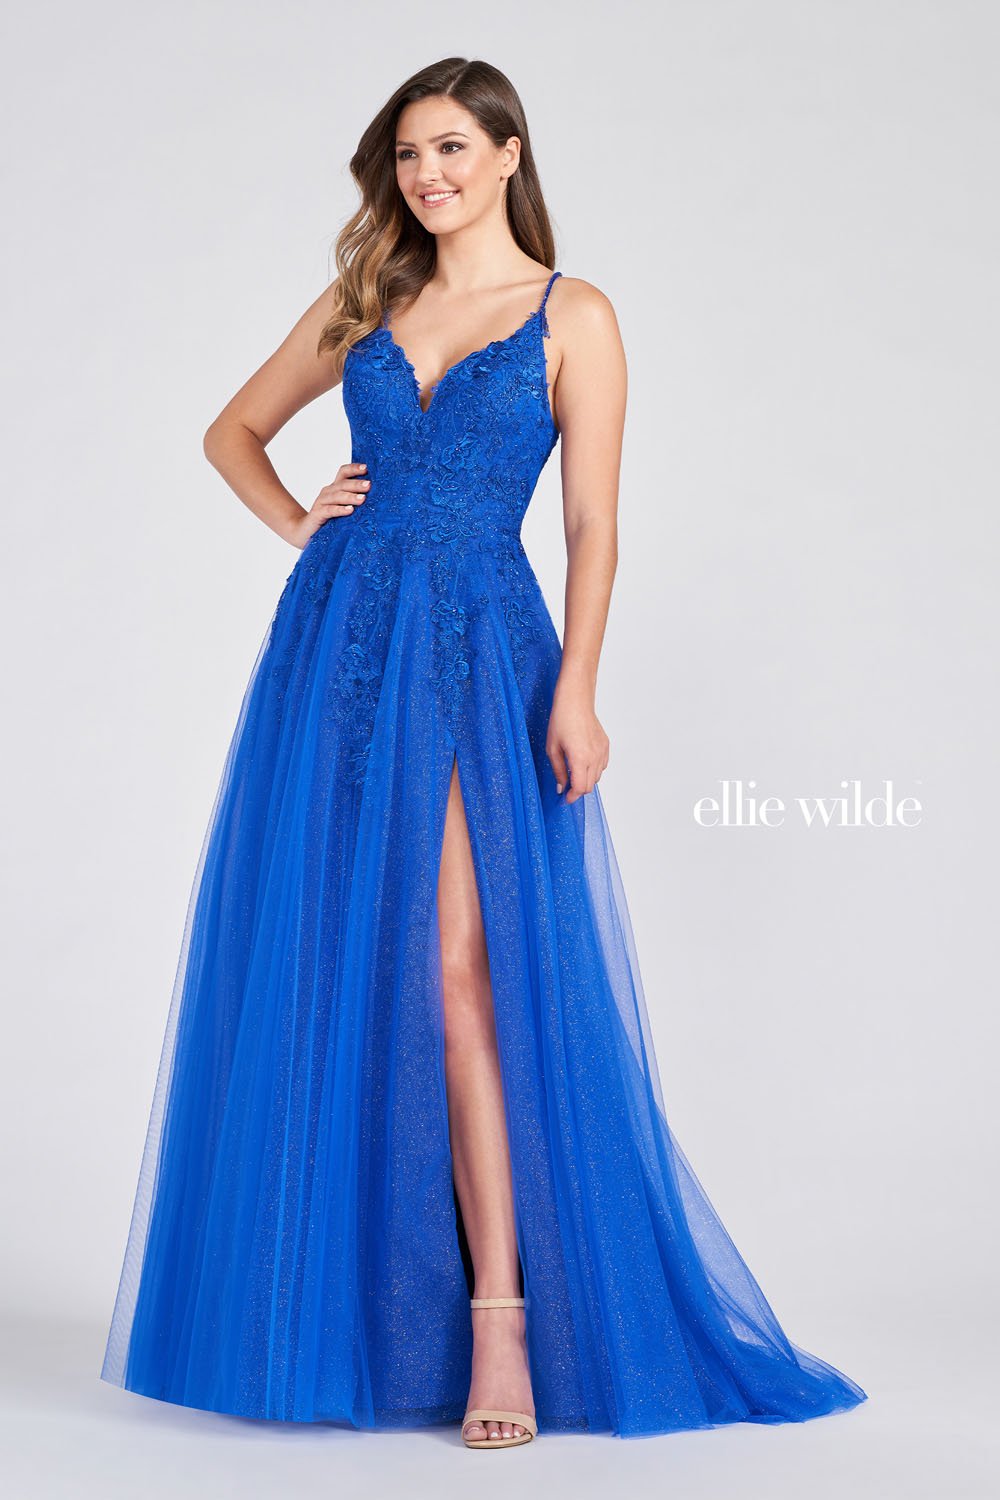 Ellie Wilde Royal Blue EW122014 Prom Dress Image.  Royal Blue formal dress.